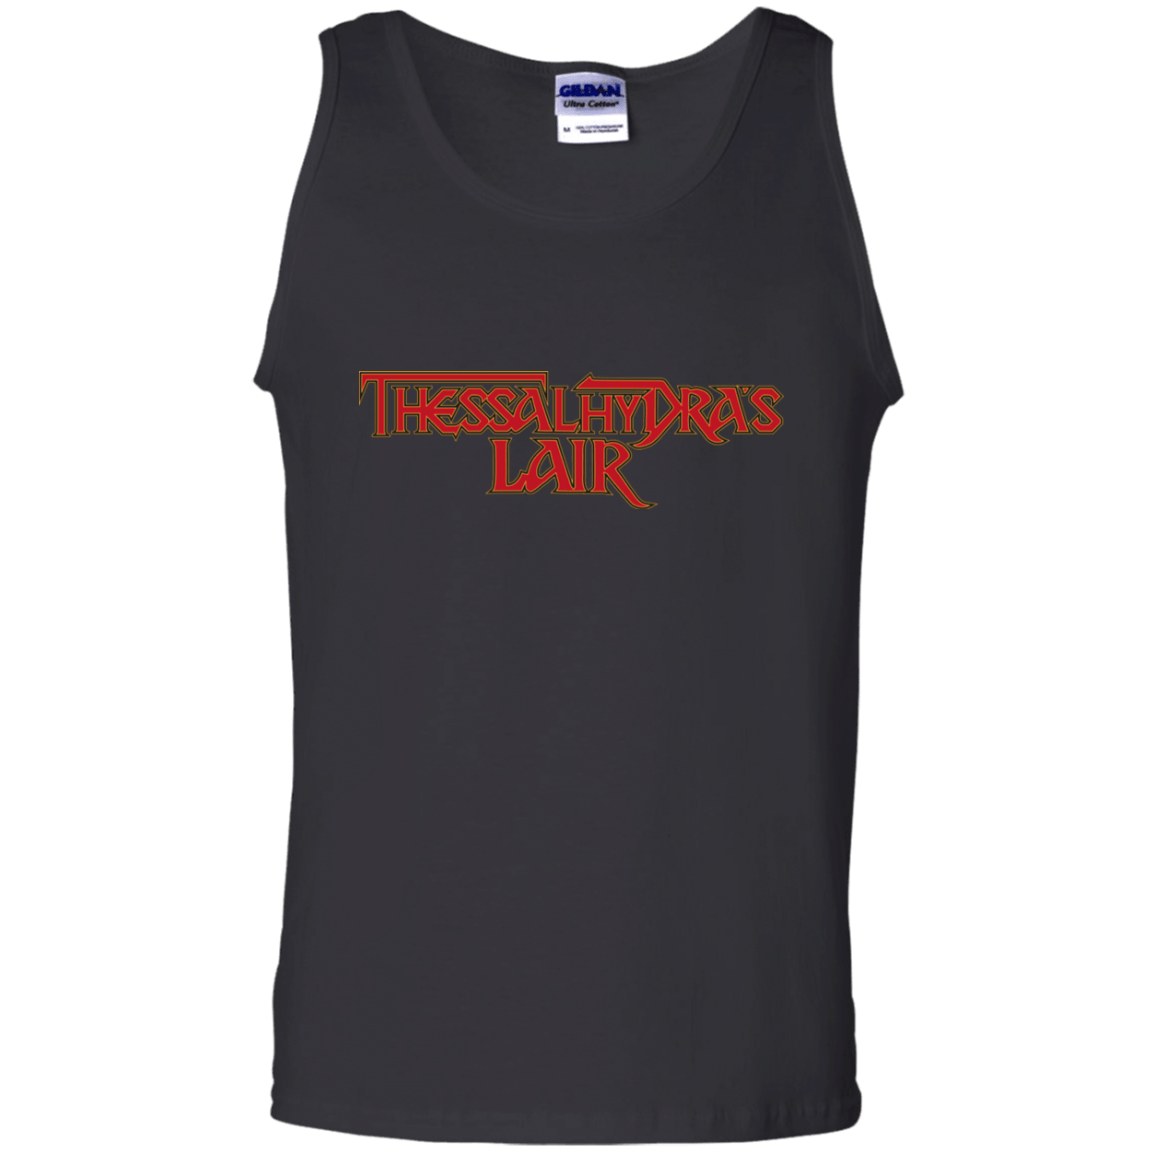 T-Shirts Black / S Thessalhydras Lair Men's Tank Top